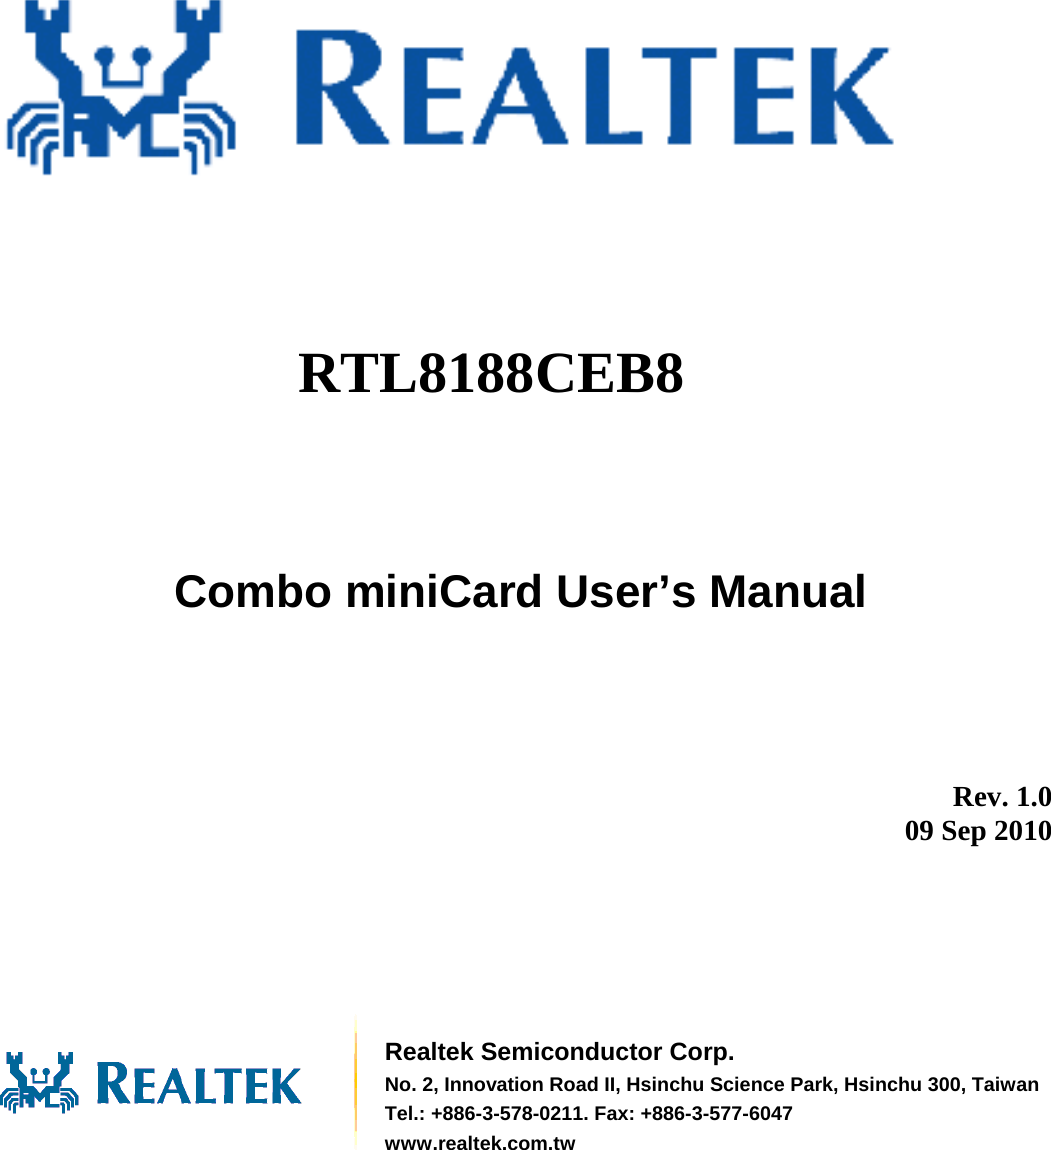               RTL8188CEB8 Combo miniCard User’s Manual          Rev. 1.0 09 Sep 2010        Realtek Semiconductor Corp. No. 2, Innovation Road II, Hsinchu Science Park, Hsinchu 300, TaiwanTel.: +886-3-578-0211. Fax: +886-3-577-6047 www.realtek.com.tw 